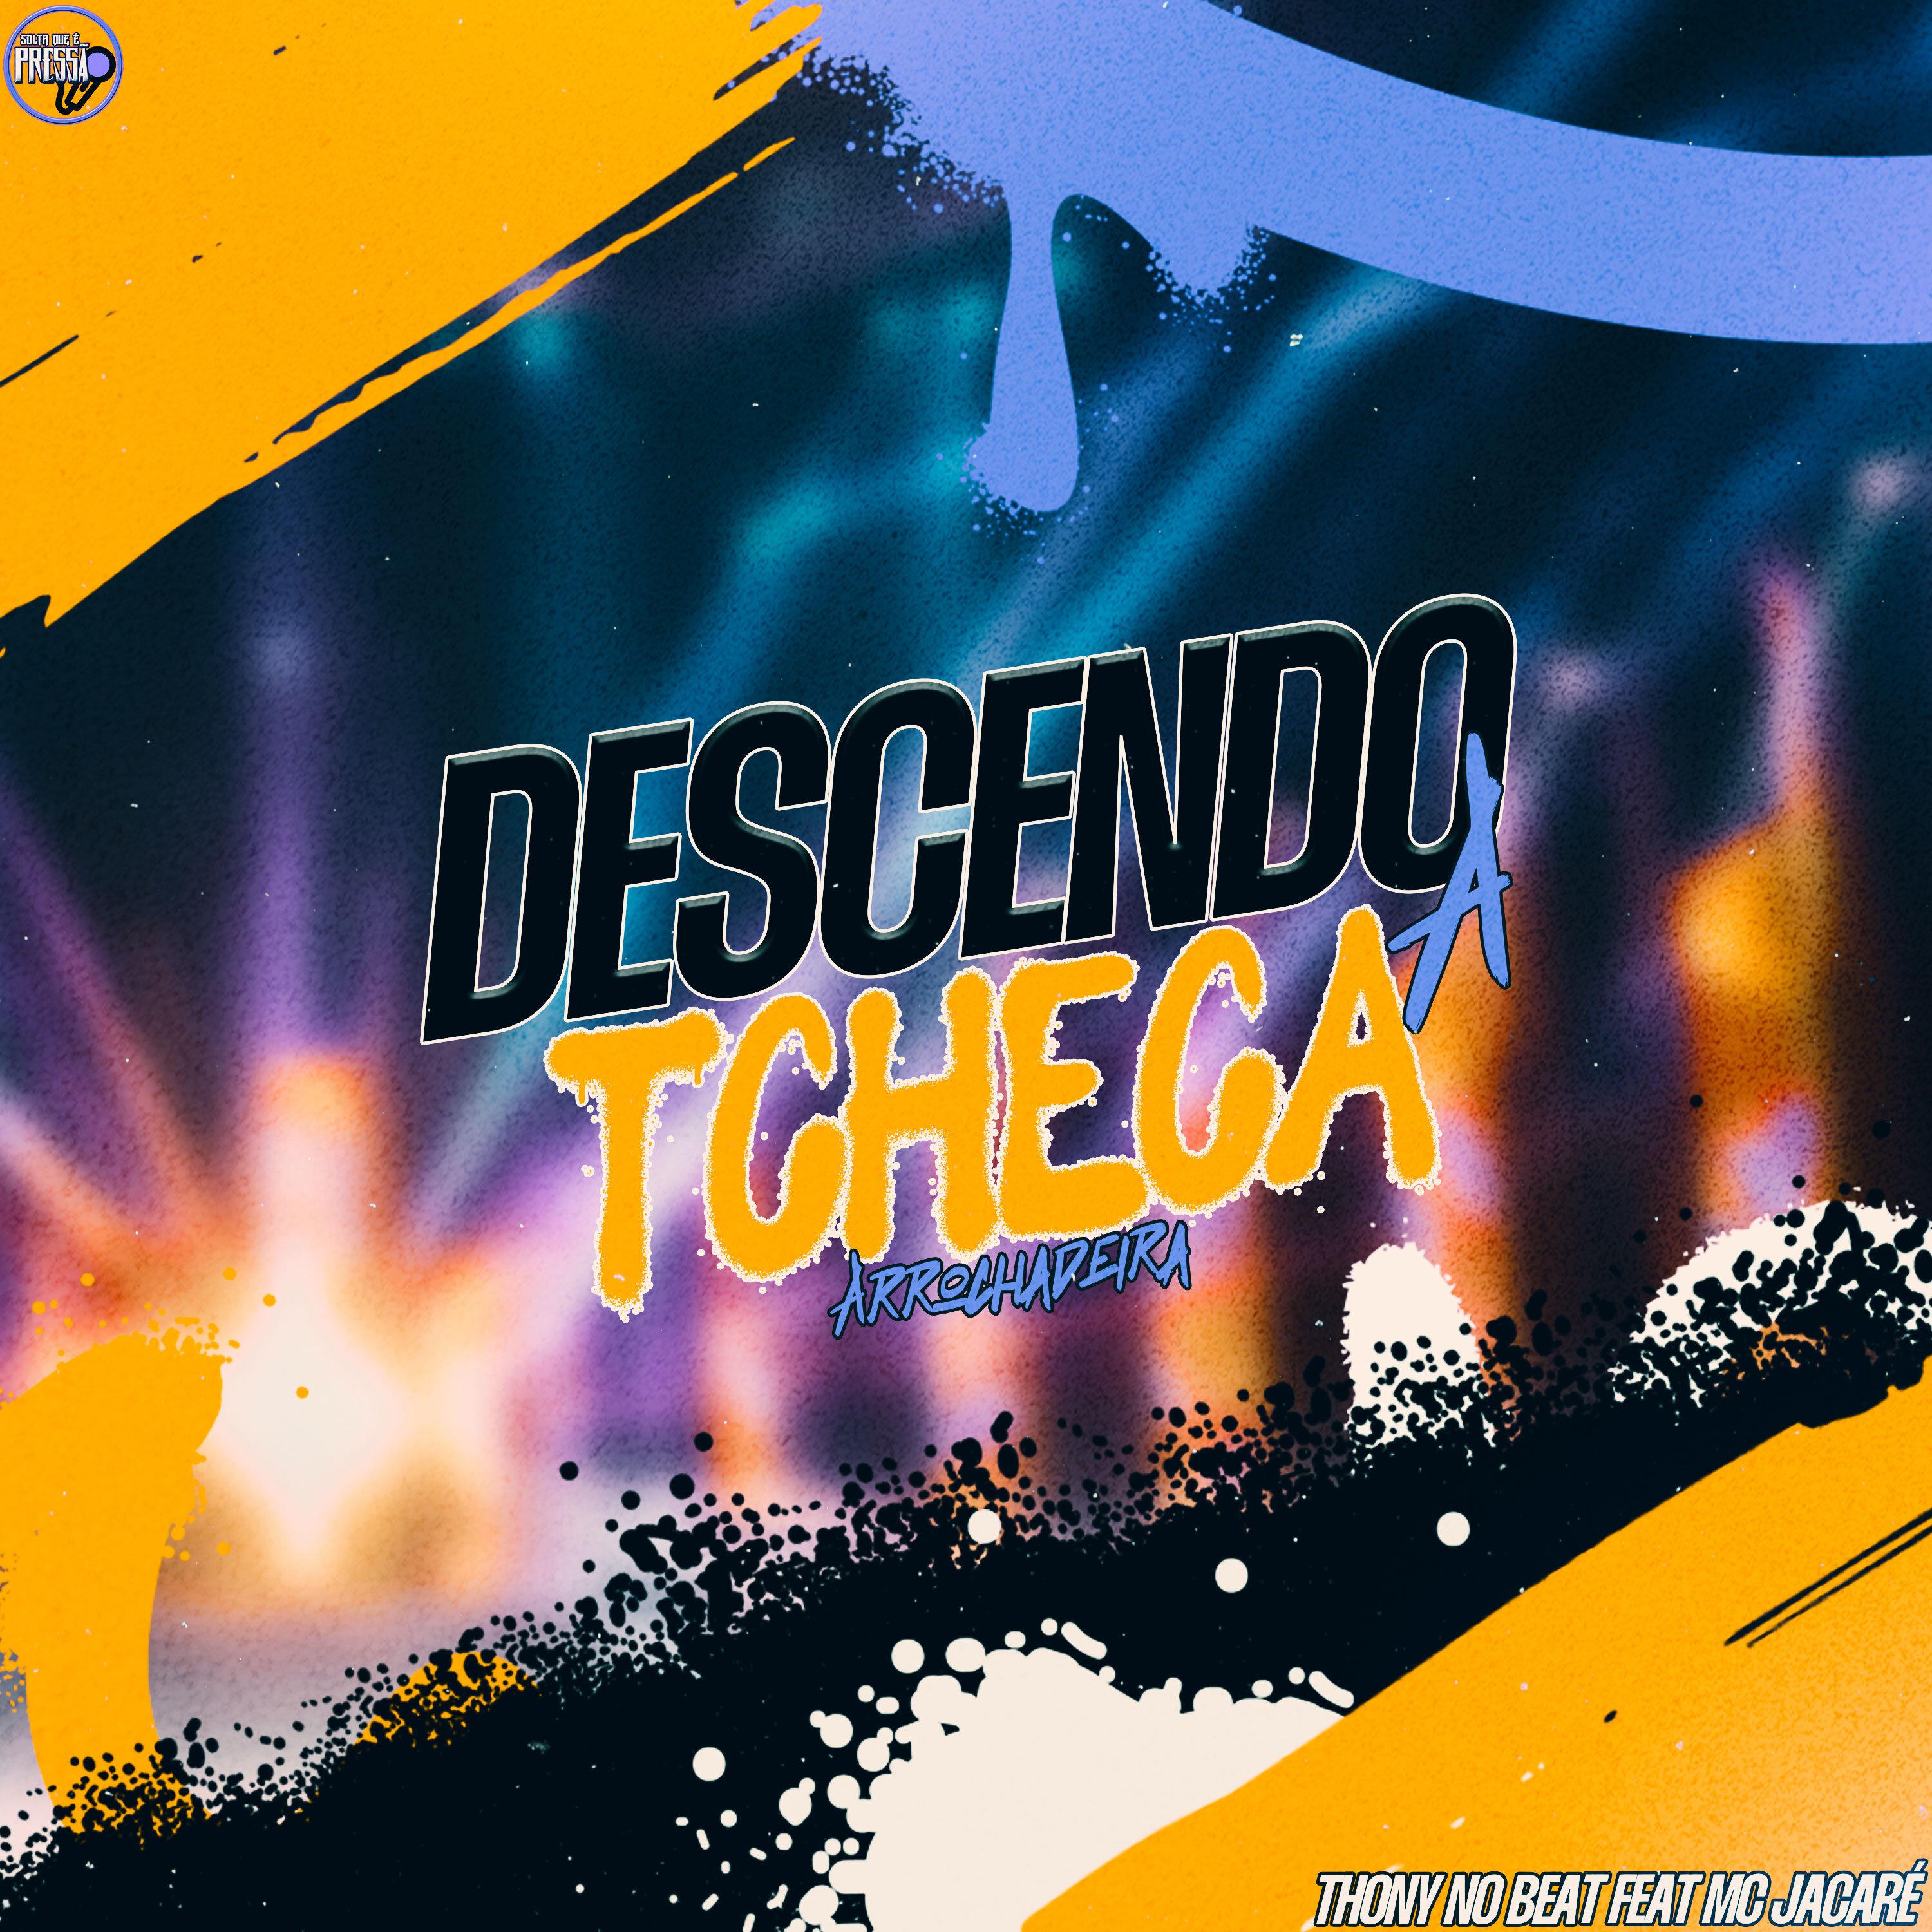 Thony No Beat - Descendo a Tcheca [Arrochadeira] (feat. Mc Jacaré)